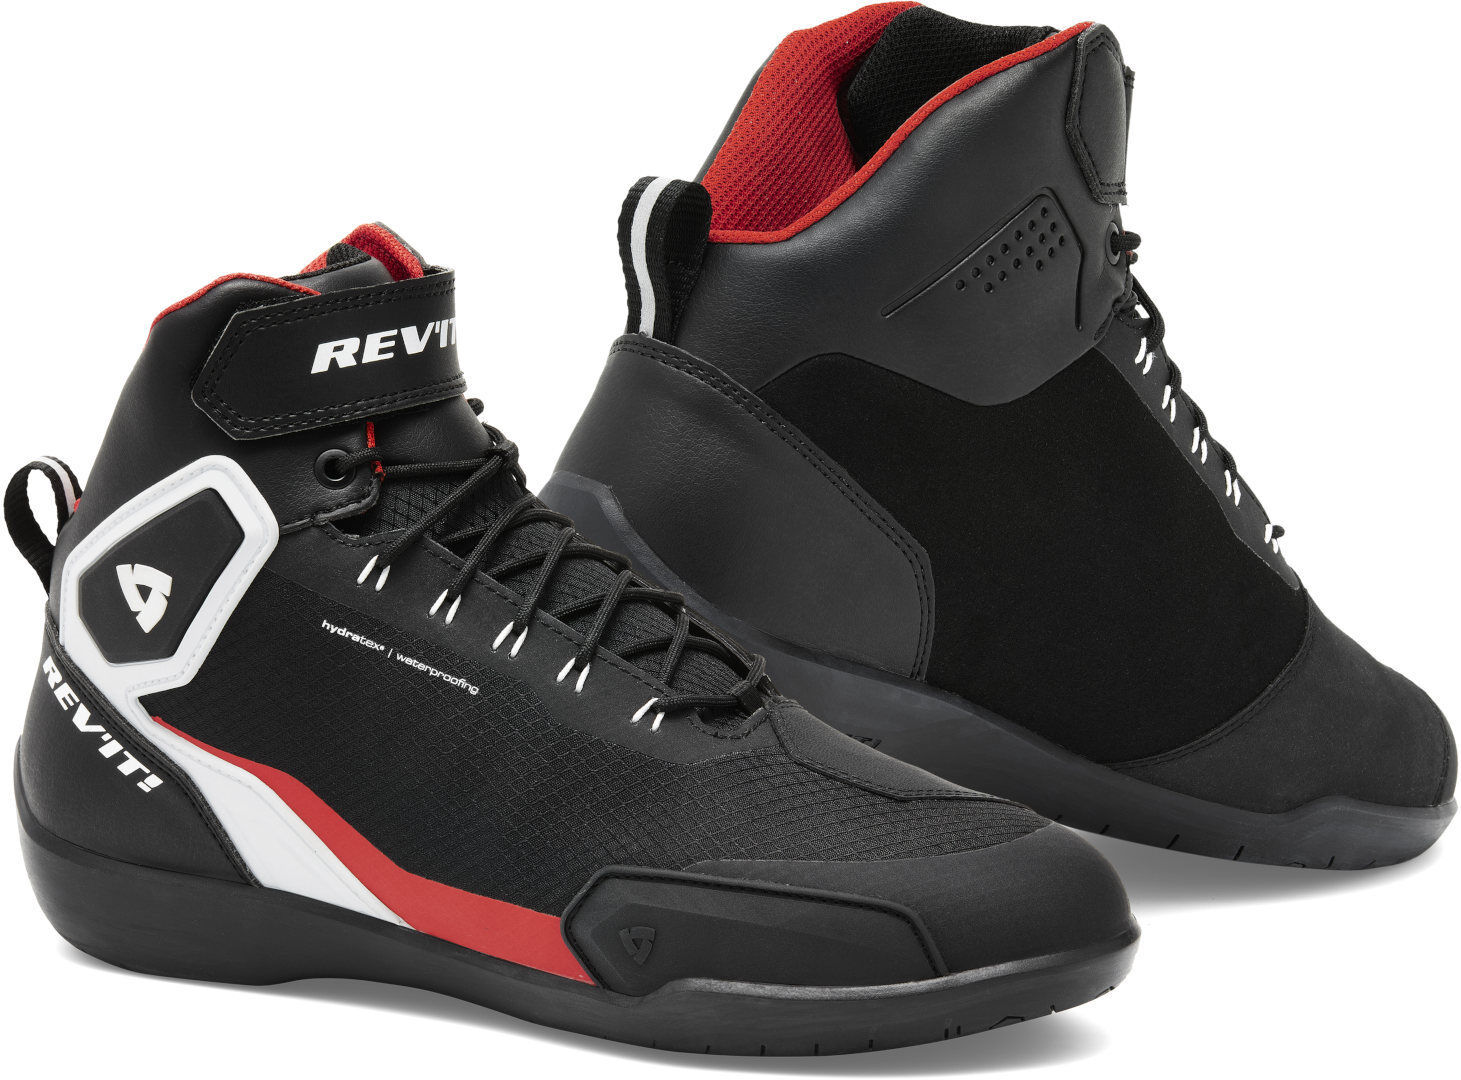 Revit G-Force H2O Zapatos impermeables para motocicletas - Negro Blanco Rojo (41)